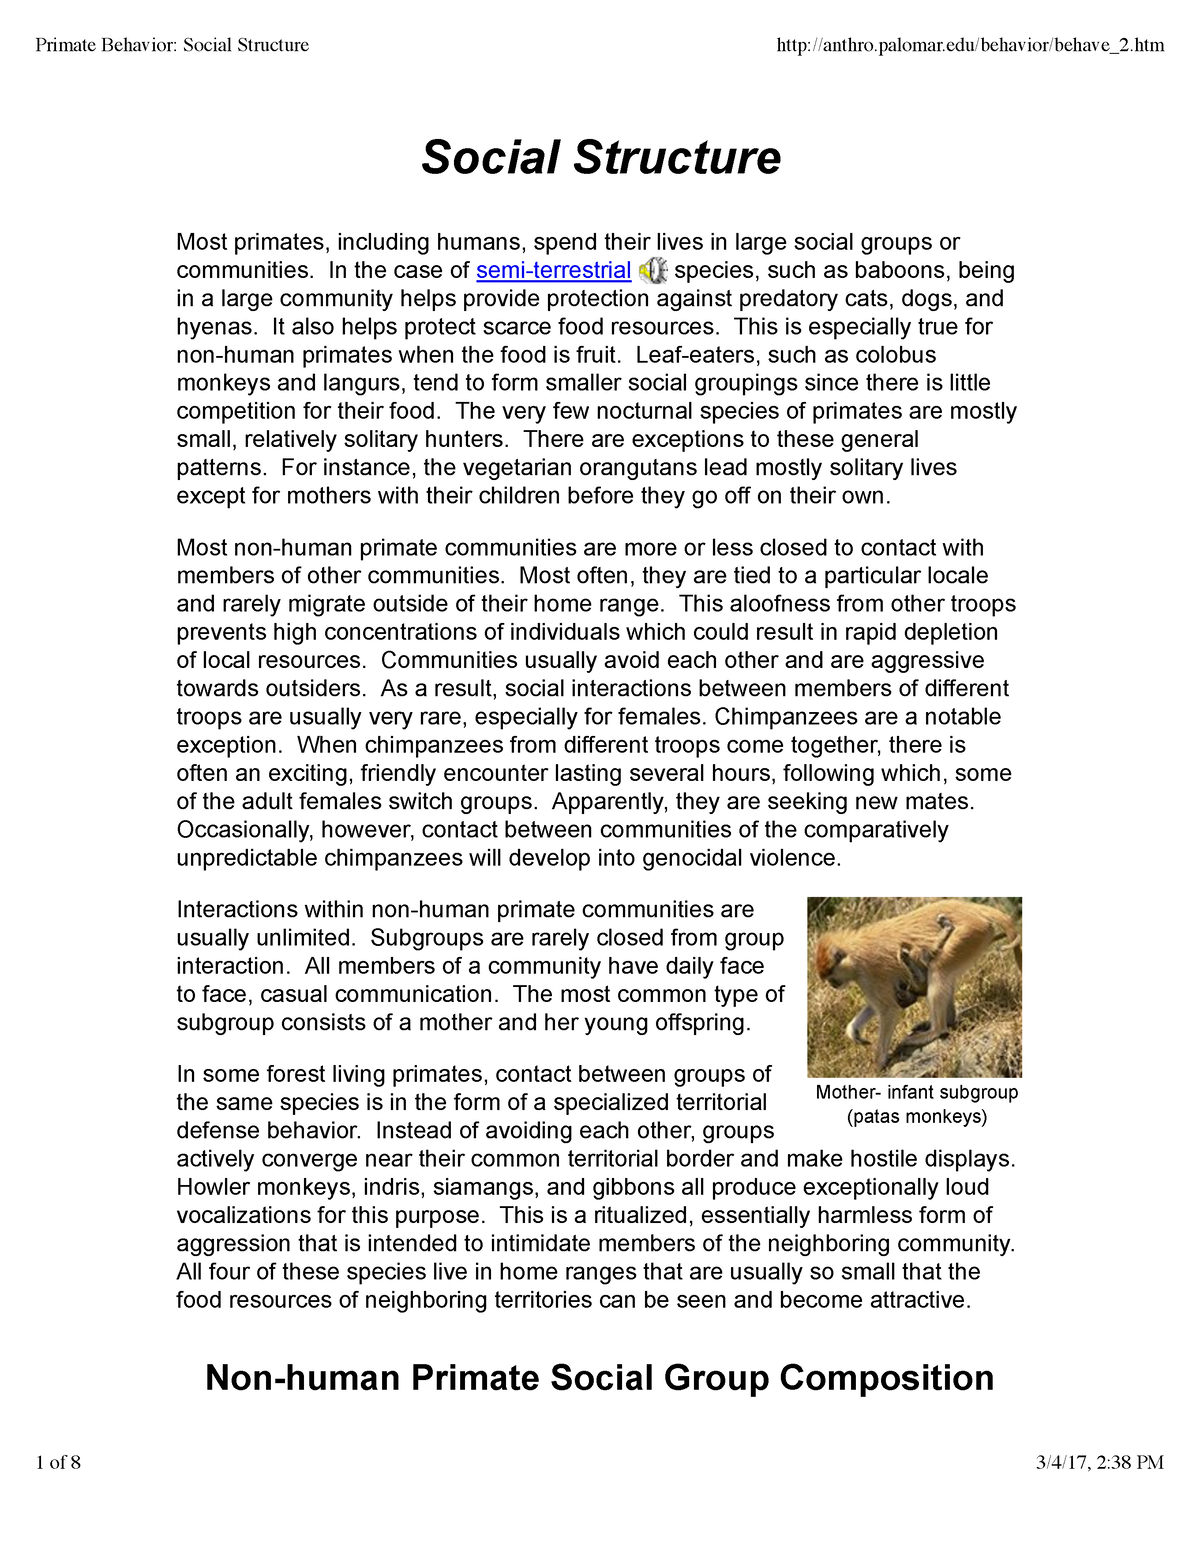 Primate Behavior Social Structure - Mother- infant subgroup (patas ...